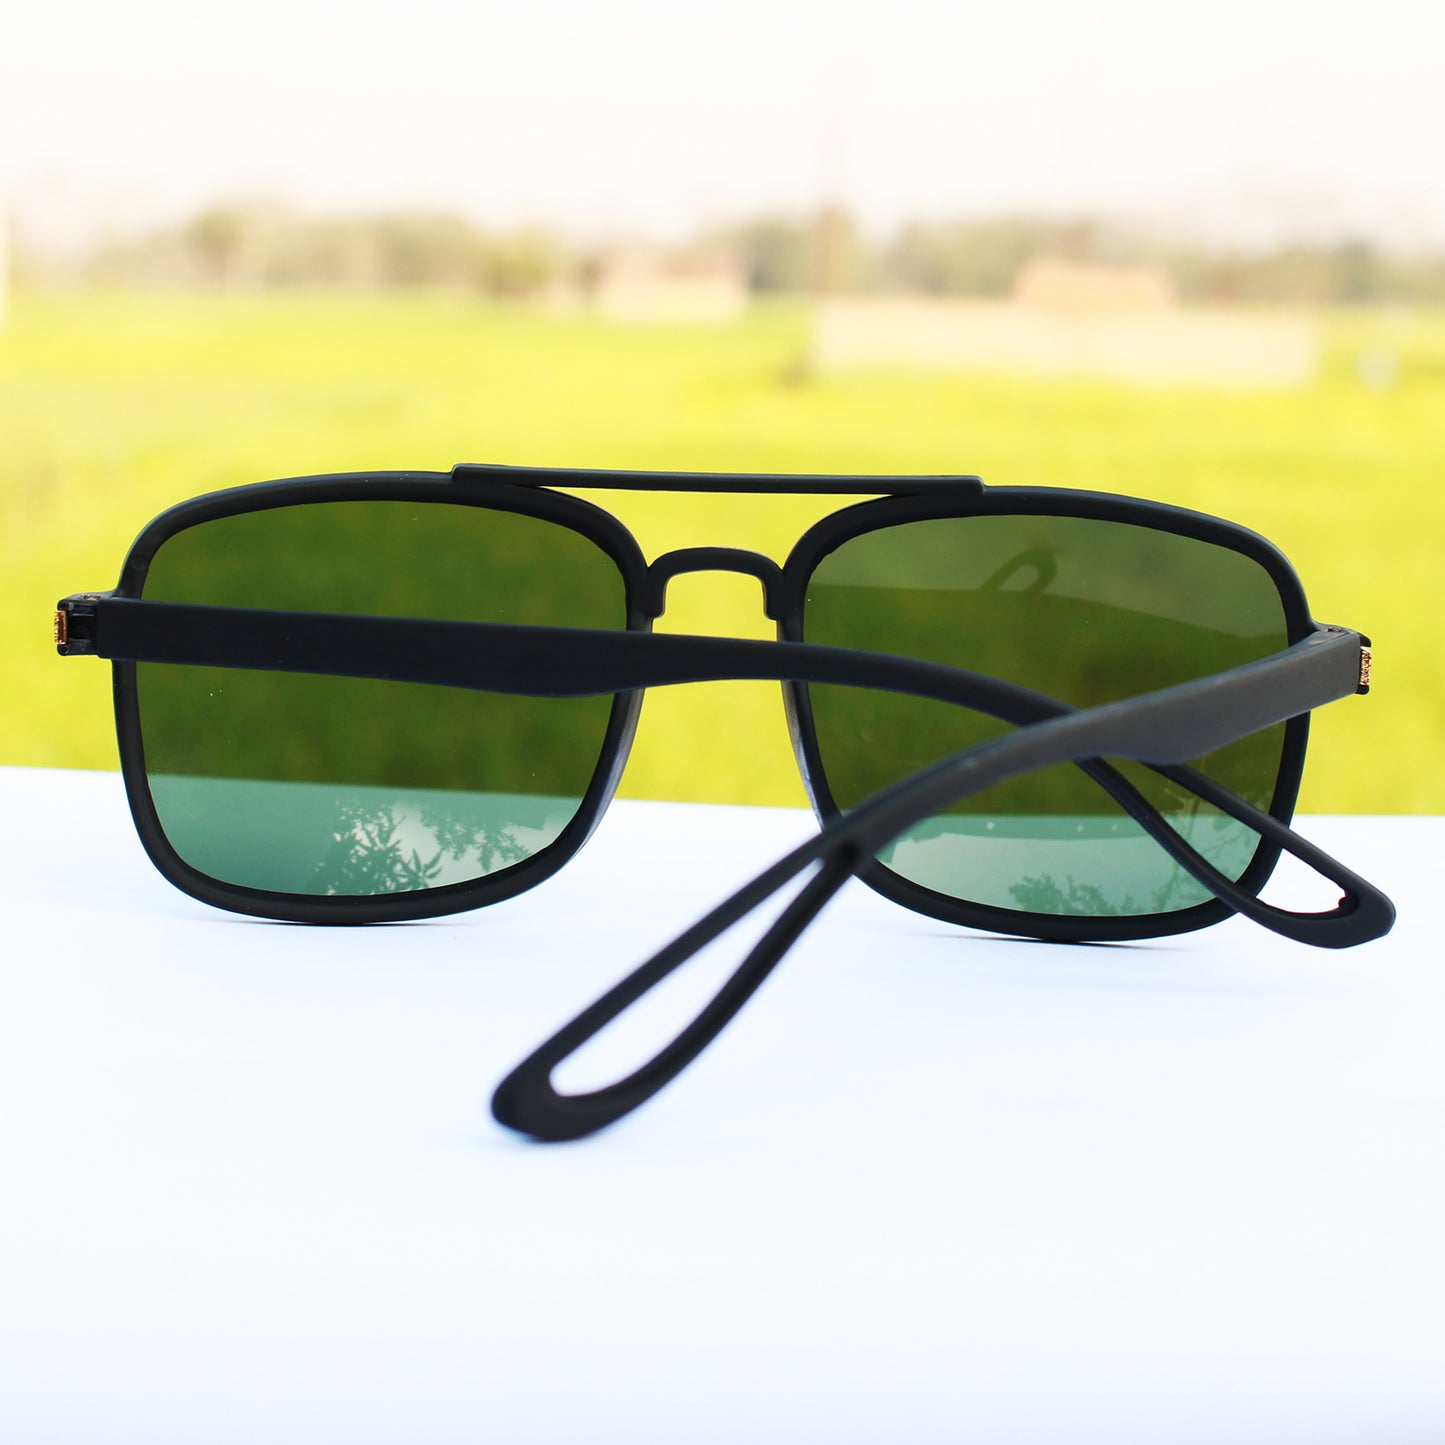 Jiebo Green Stylish 100% UV Protection Sunglasses